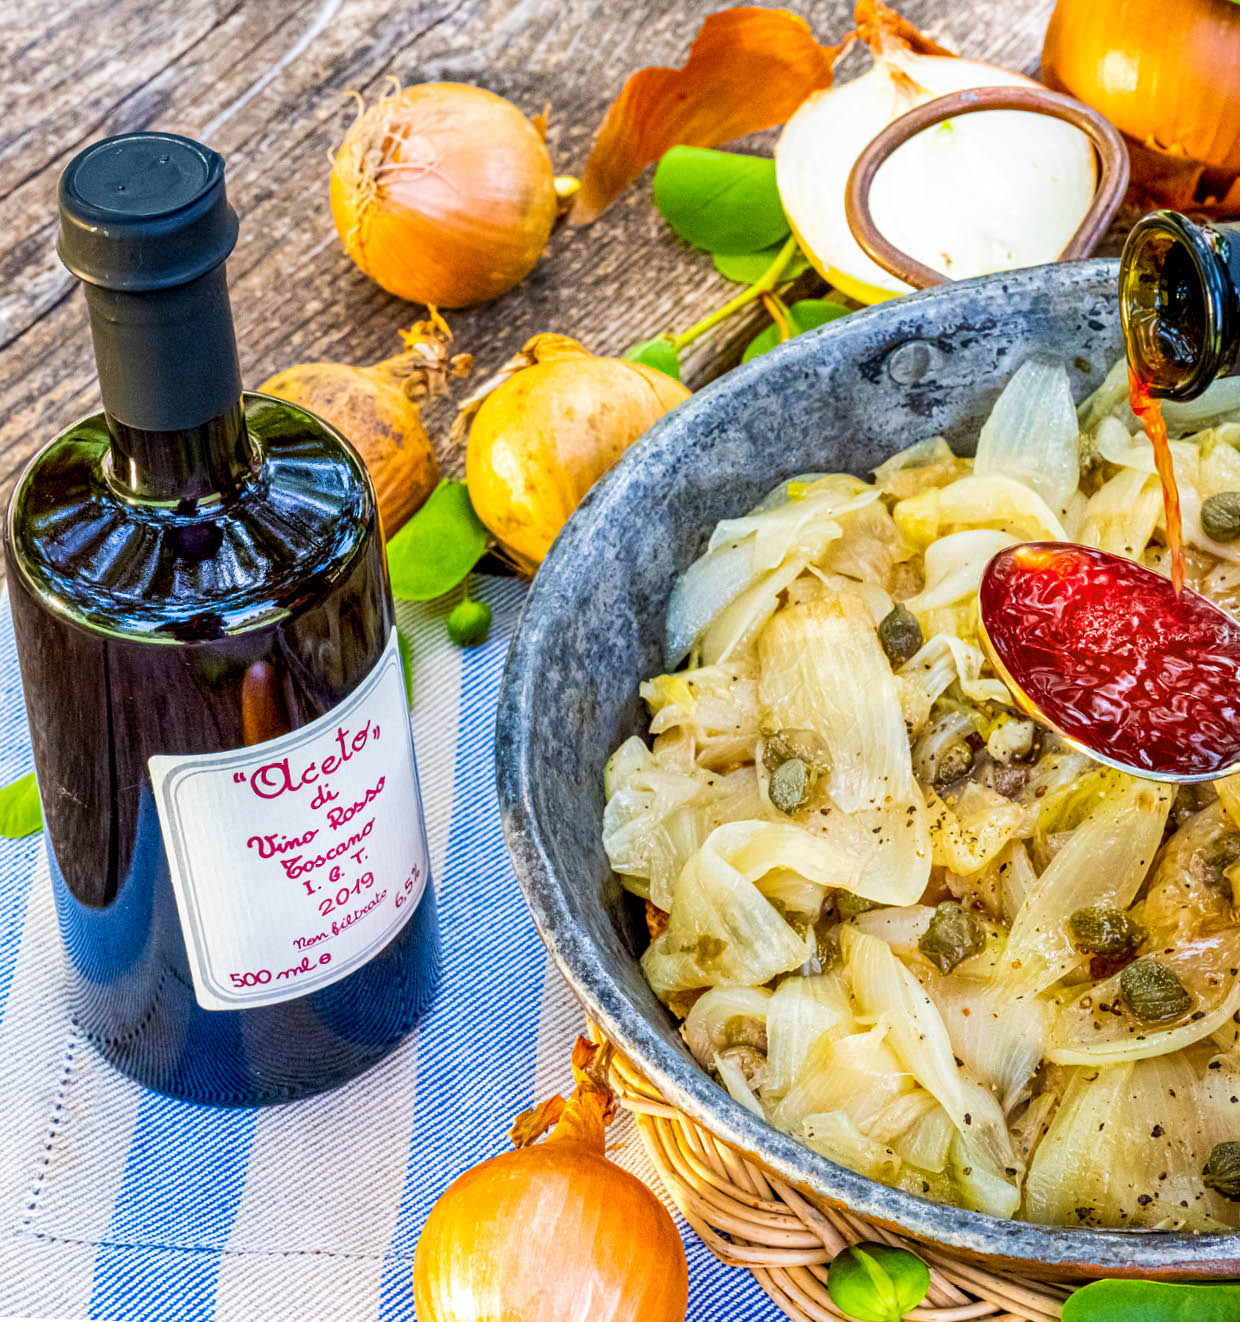 Tuscan Red Wine Vinegar I.G.T. 2019